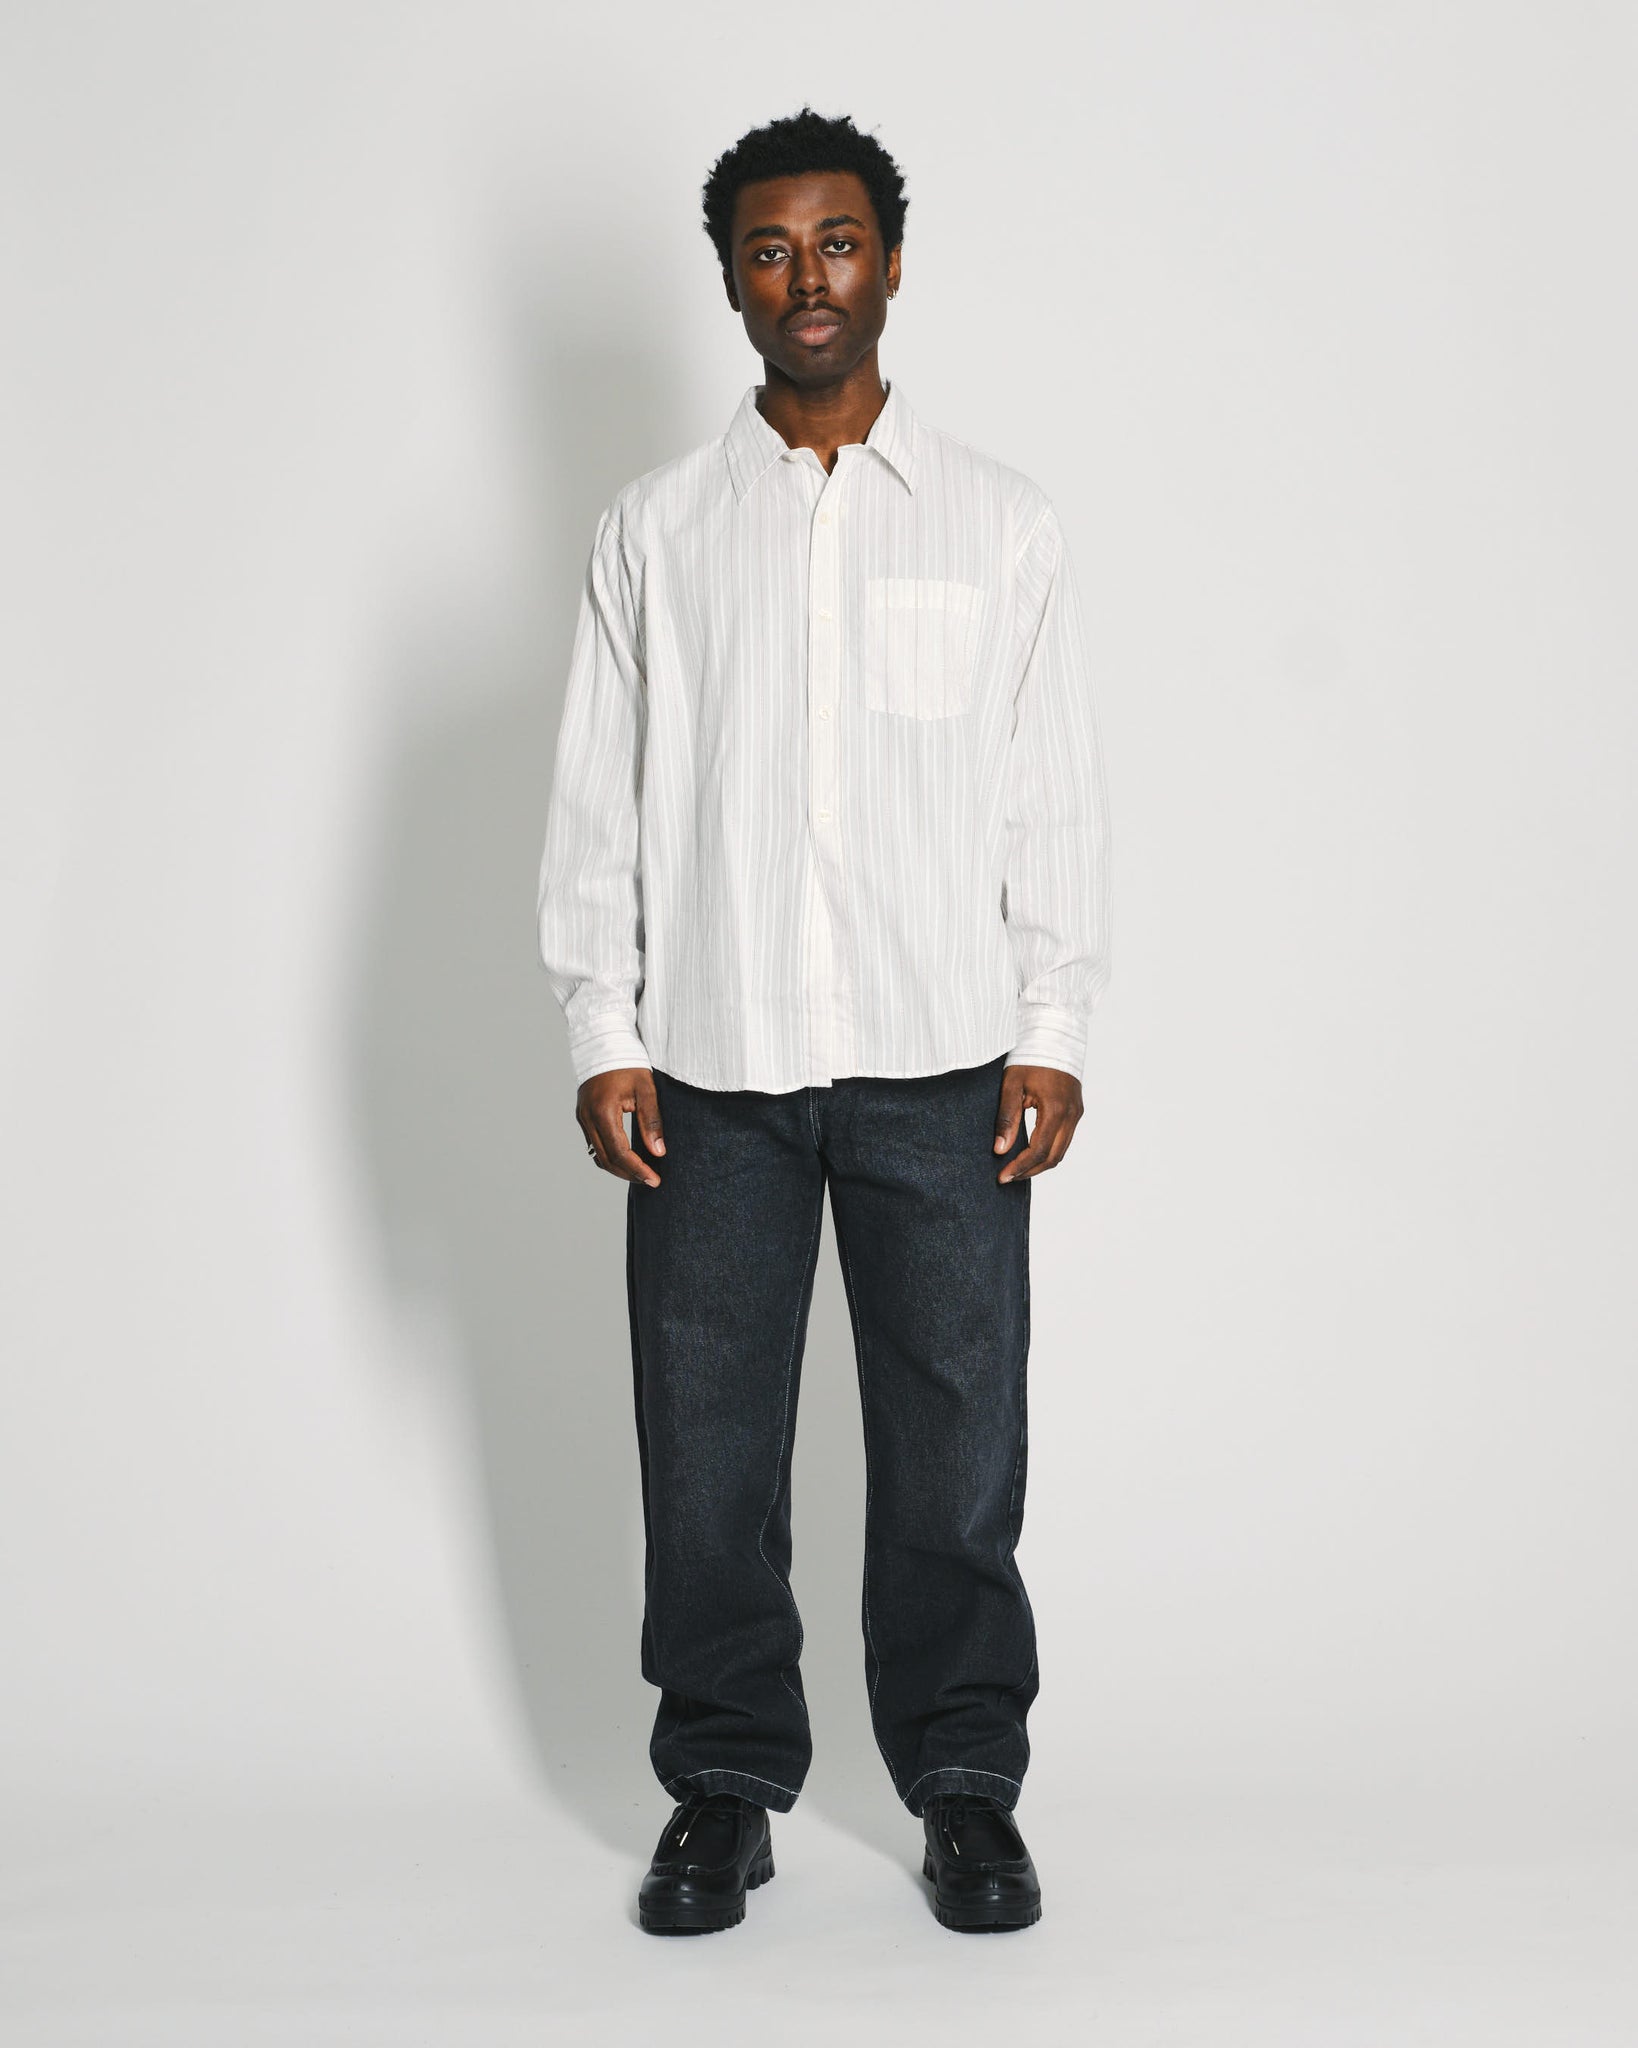 Executive Shirt - Light Brown Stripe